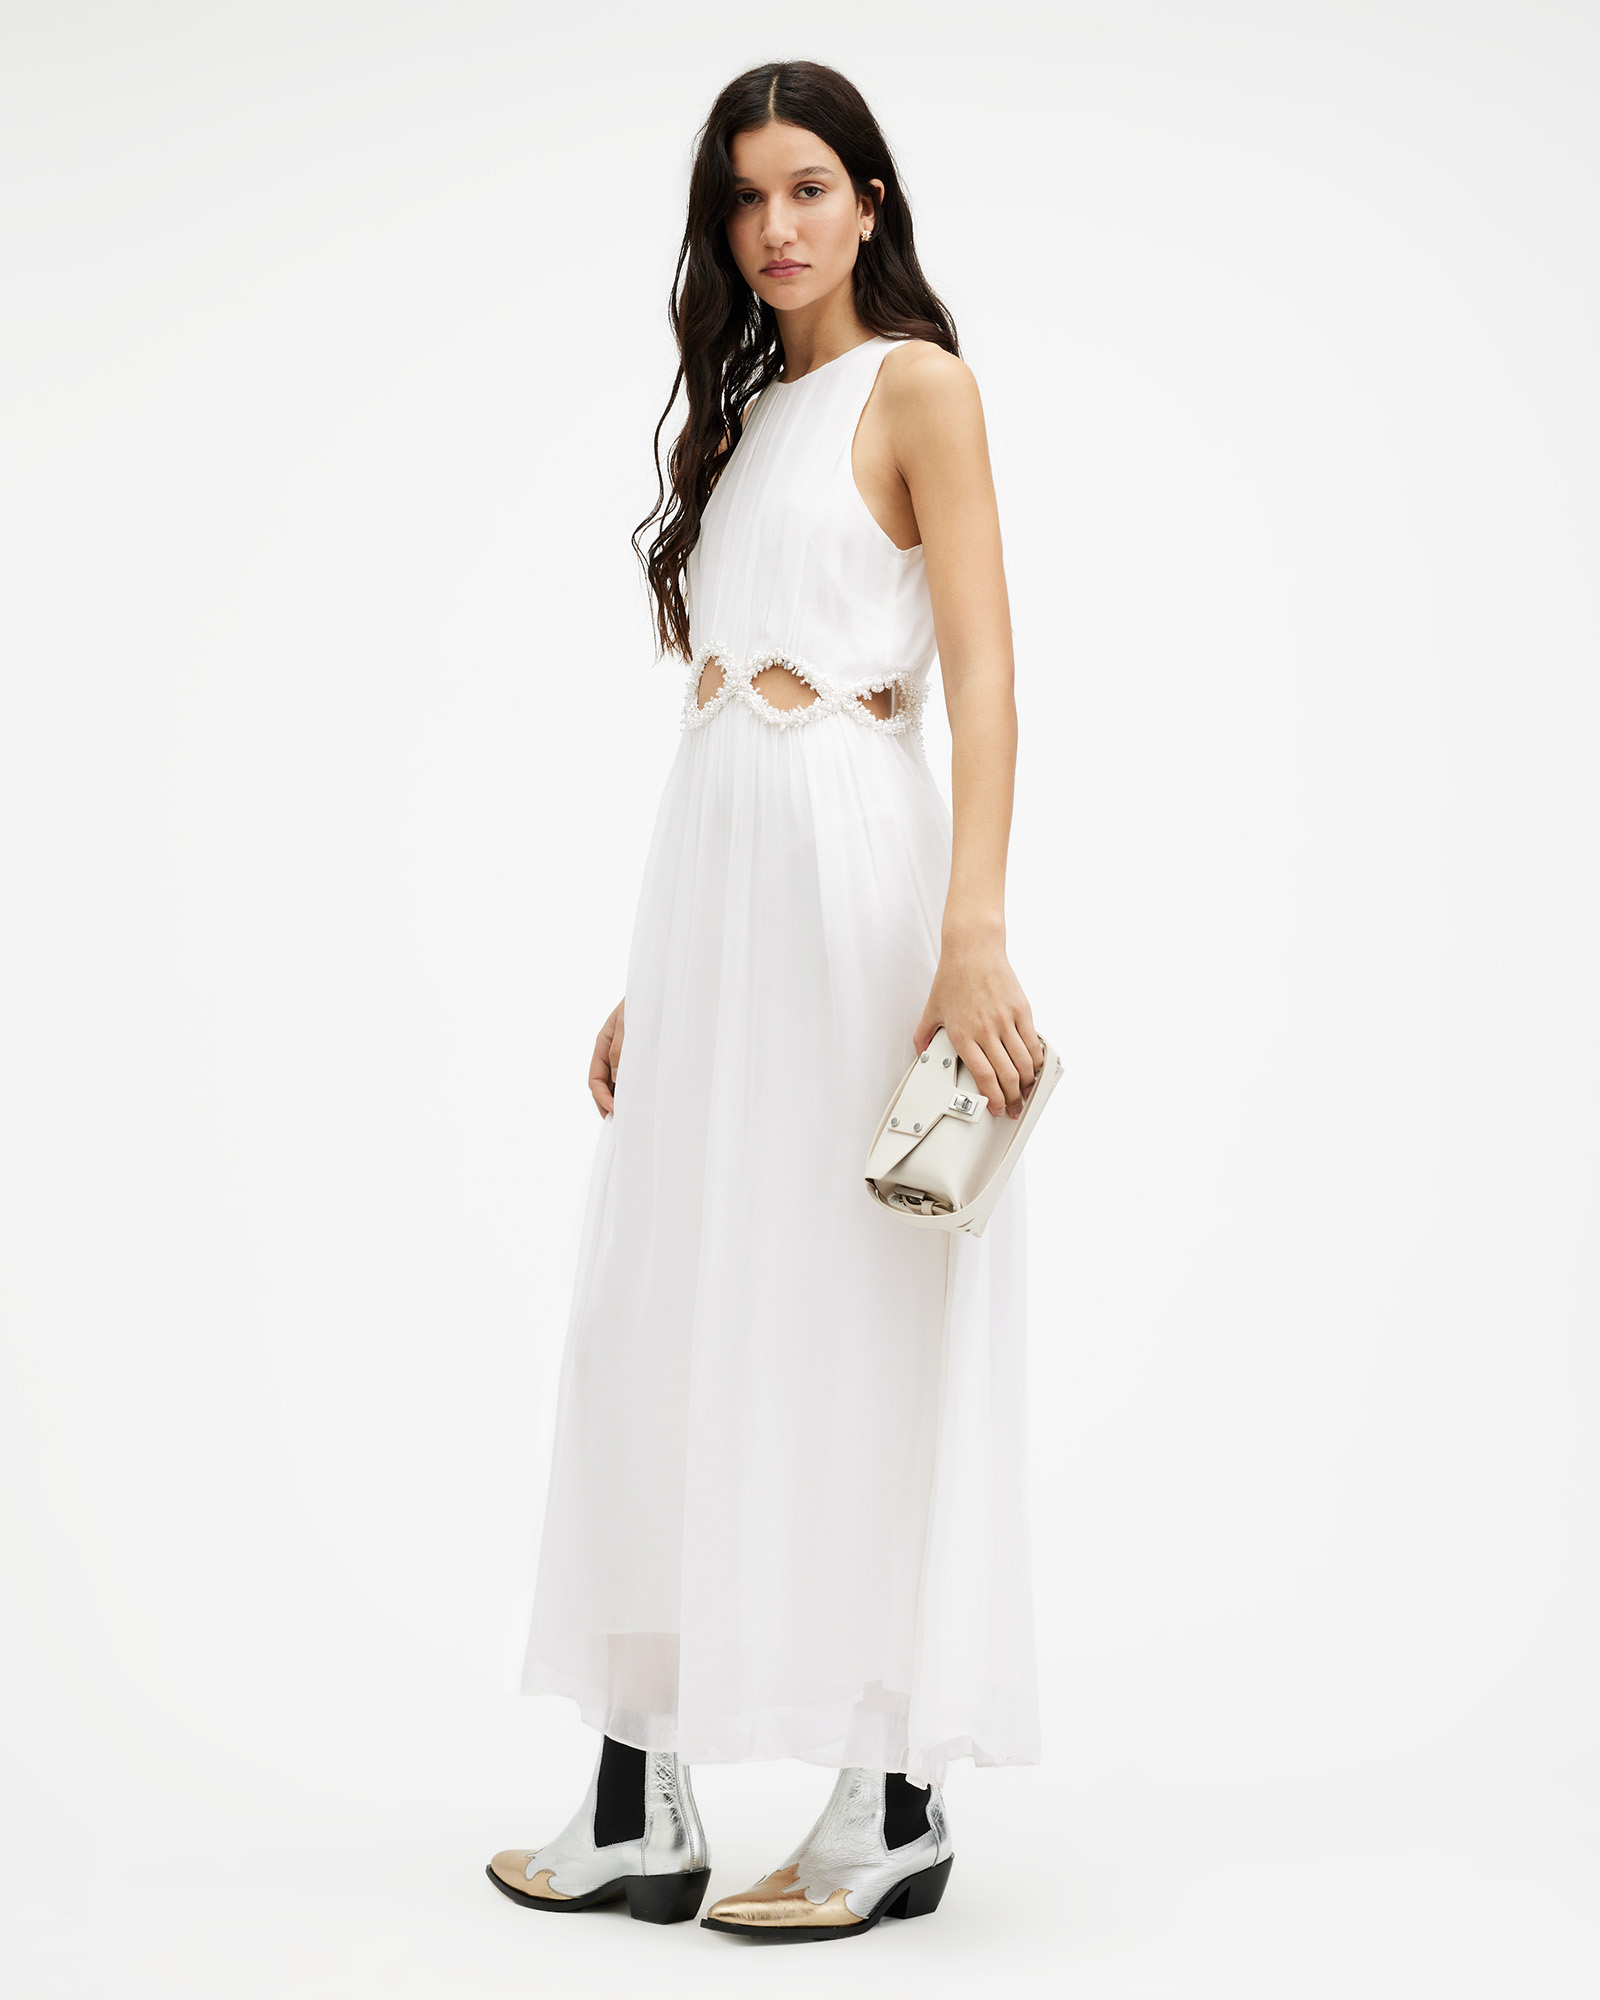 AllSaints Mabel Cut Out Embellished Maxi Dress,, Off White, Size: UK 8/US 4